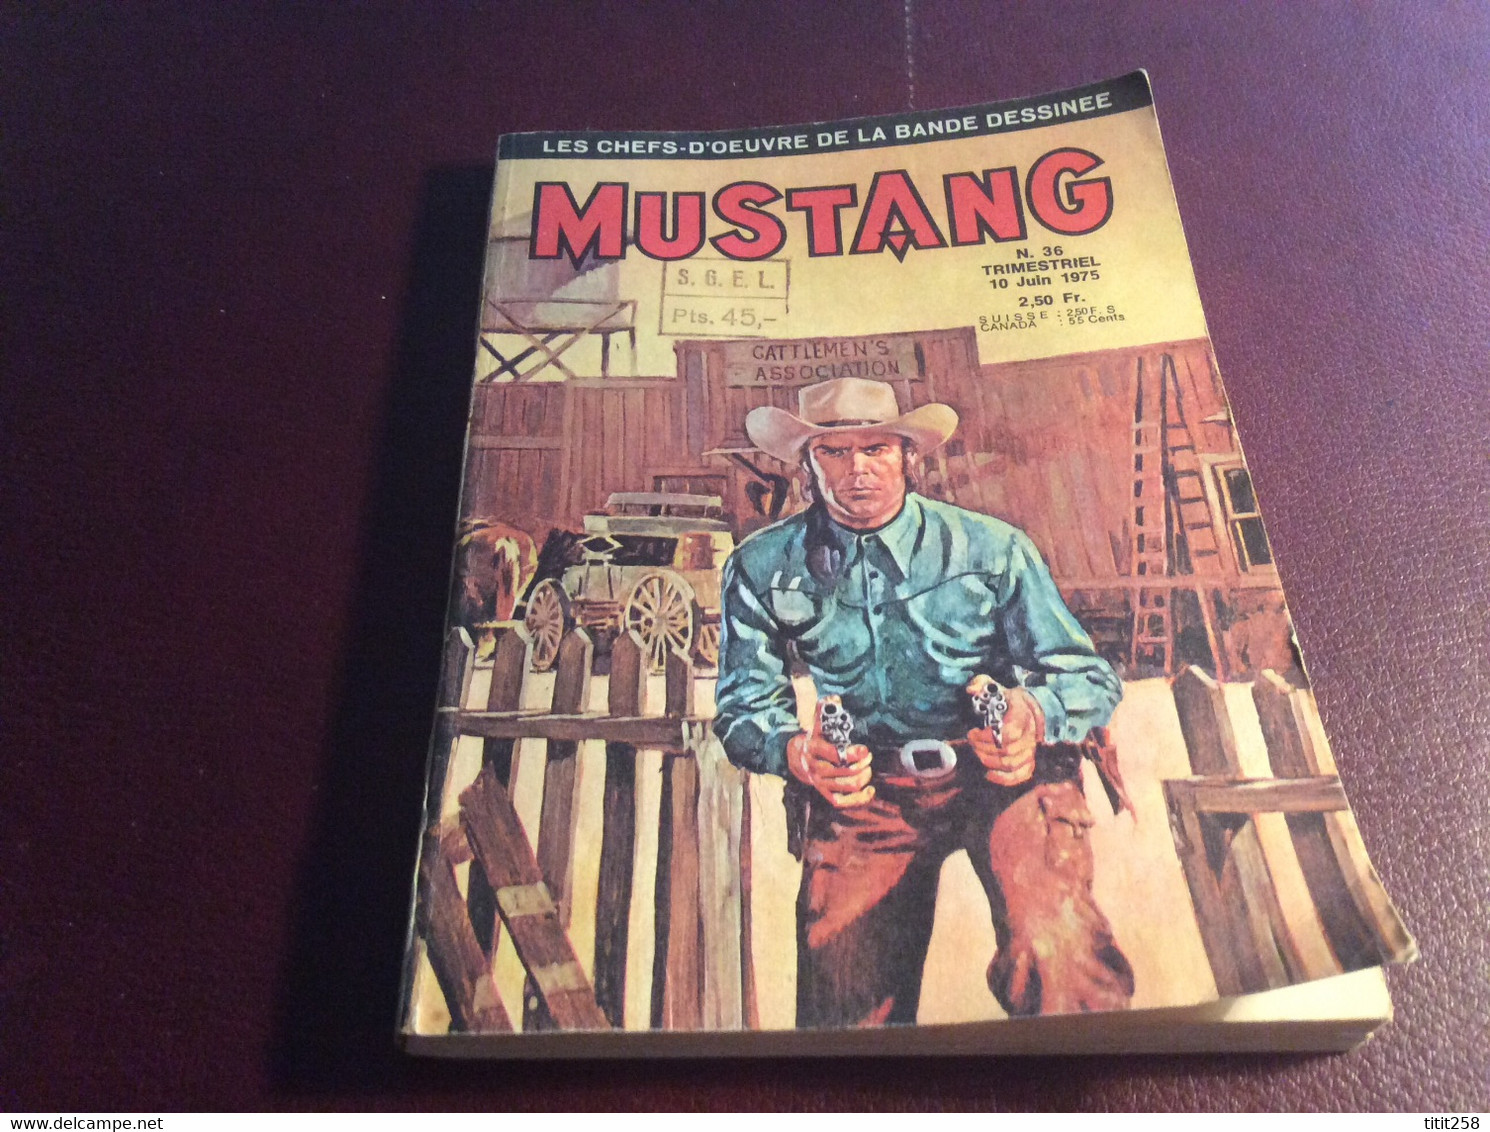 Mustang Cow Boys N° 36 Juin 1975 . Jimmy Logan . Peter Berg . - Mustang